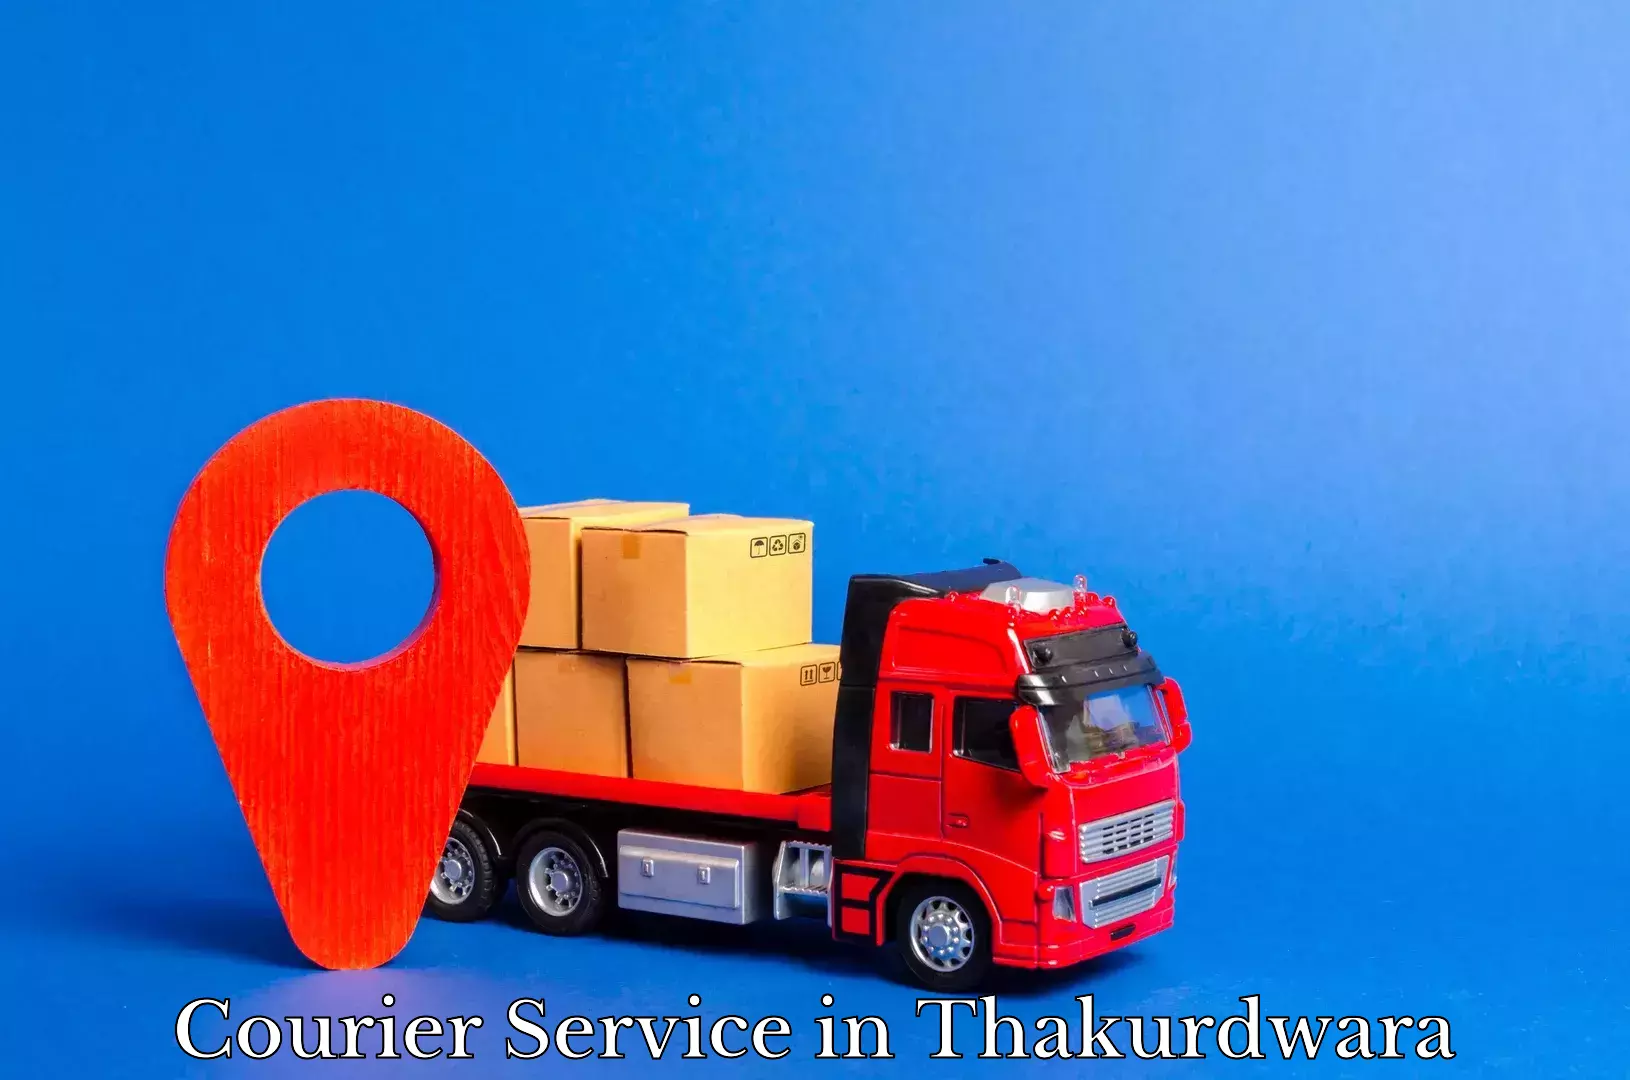 E-commerce fulfillment in Thakurdwara